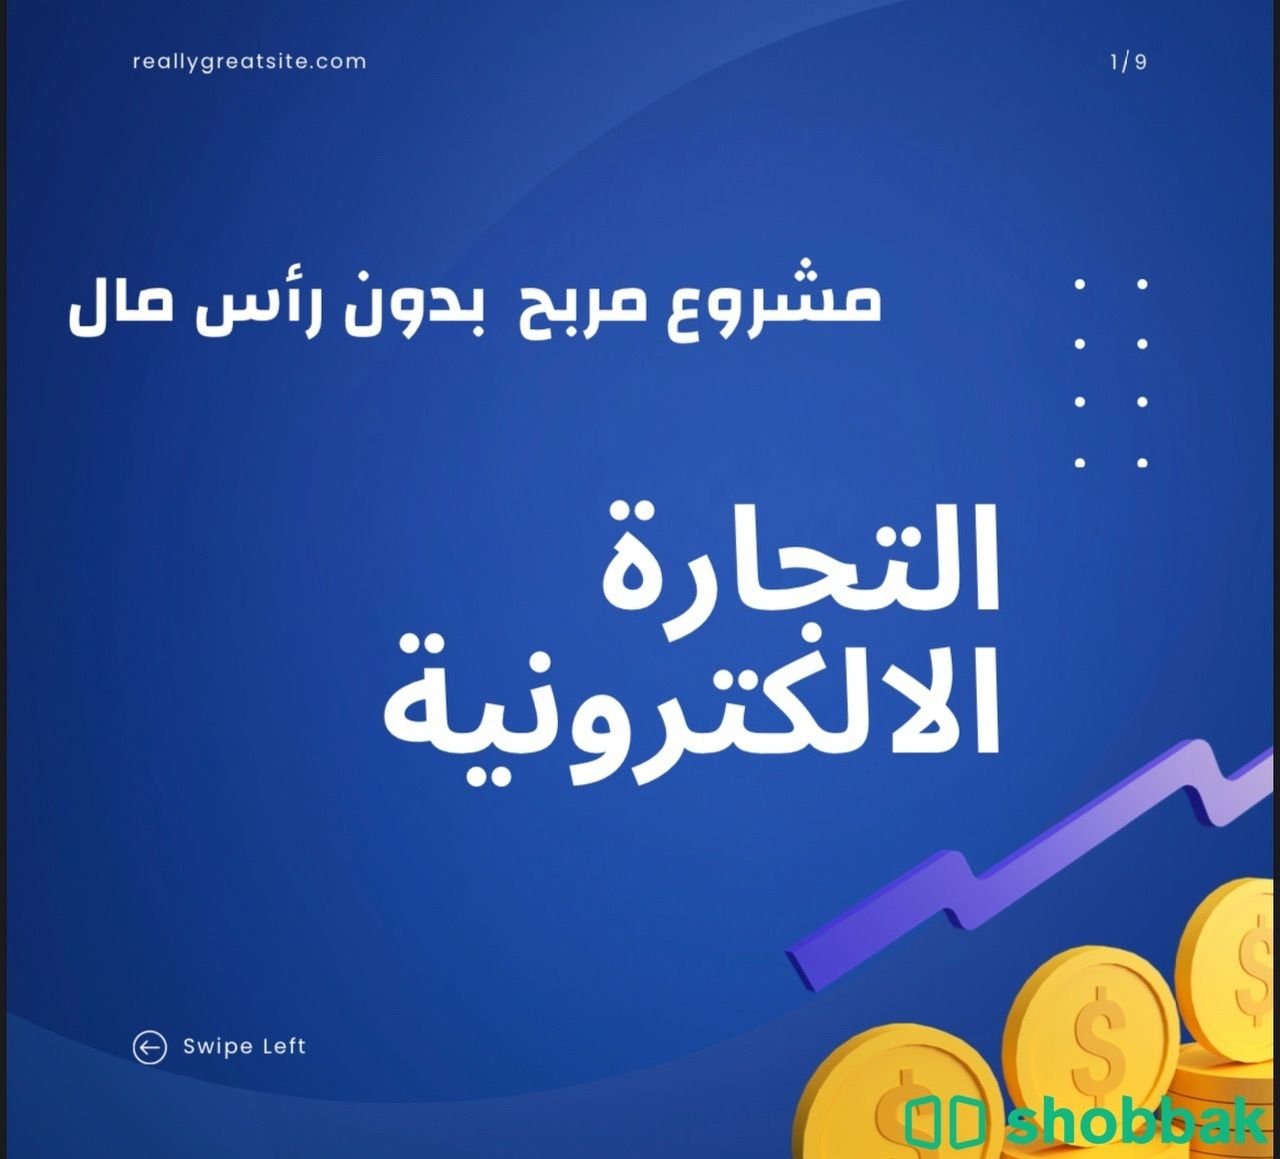 ملف مشروع مربح بدون رأس مال Shobbak Saudi Arabia